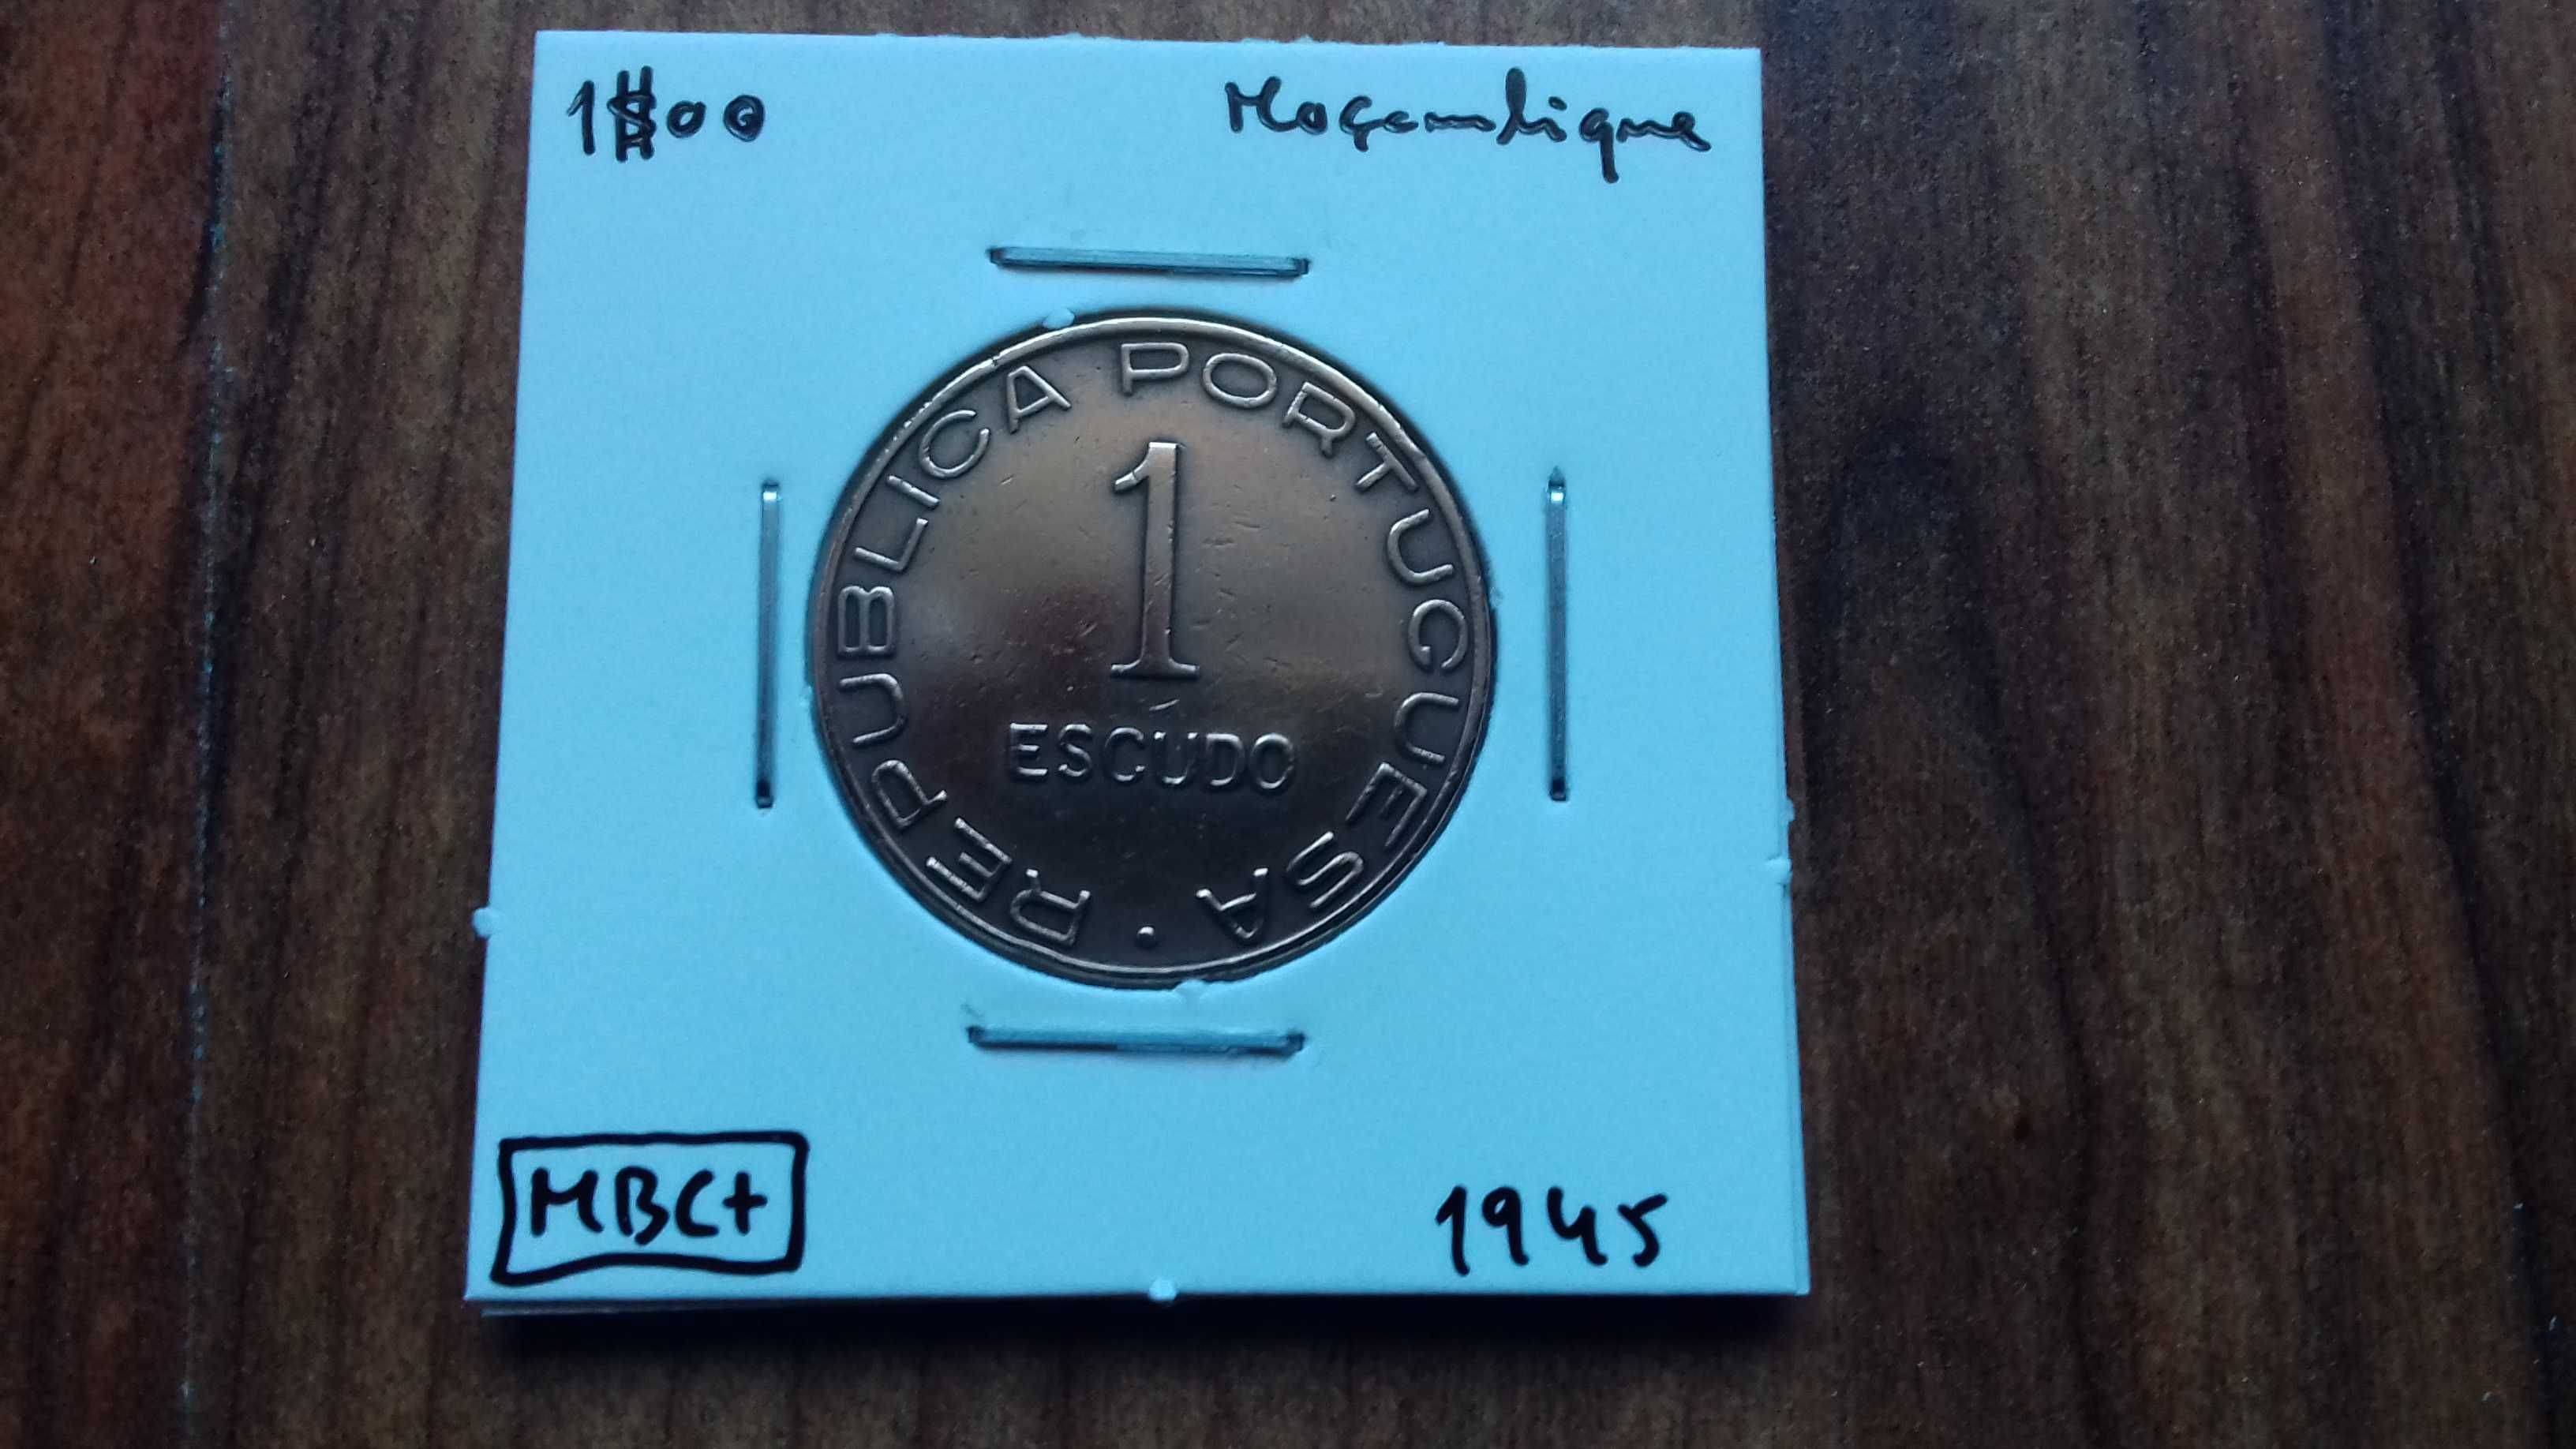 Moeda 1$00 1945 Moçambique - MBC+